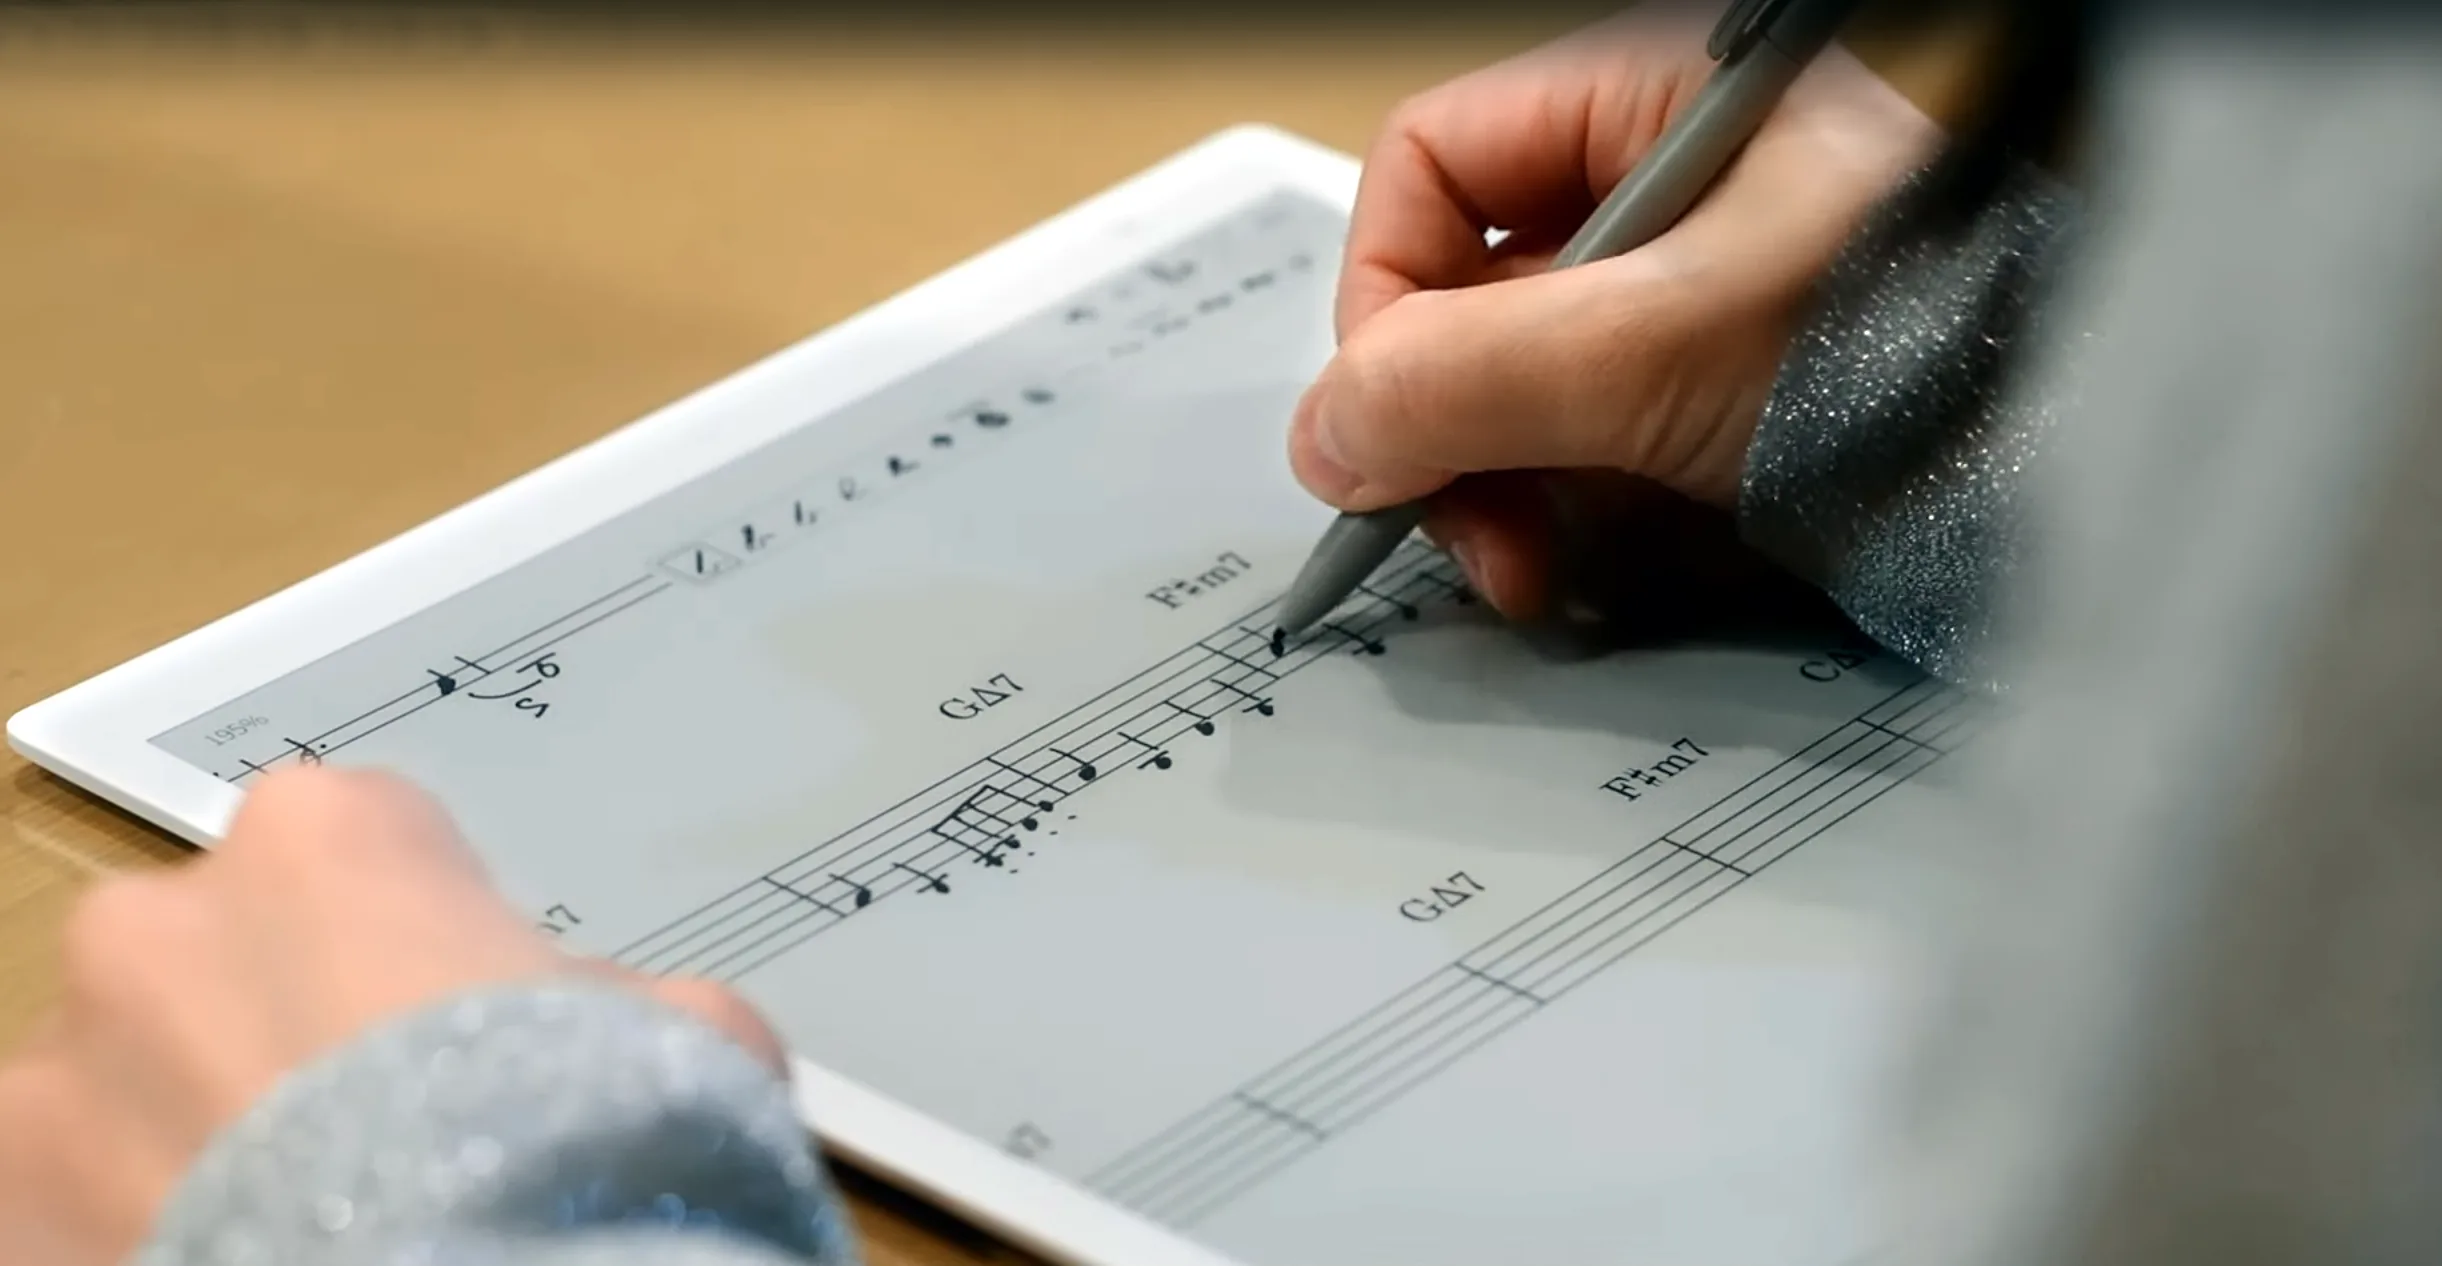 Fujitsu Quaderno A4 (Gen 2) eReader as a sheet music reader with scores